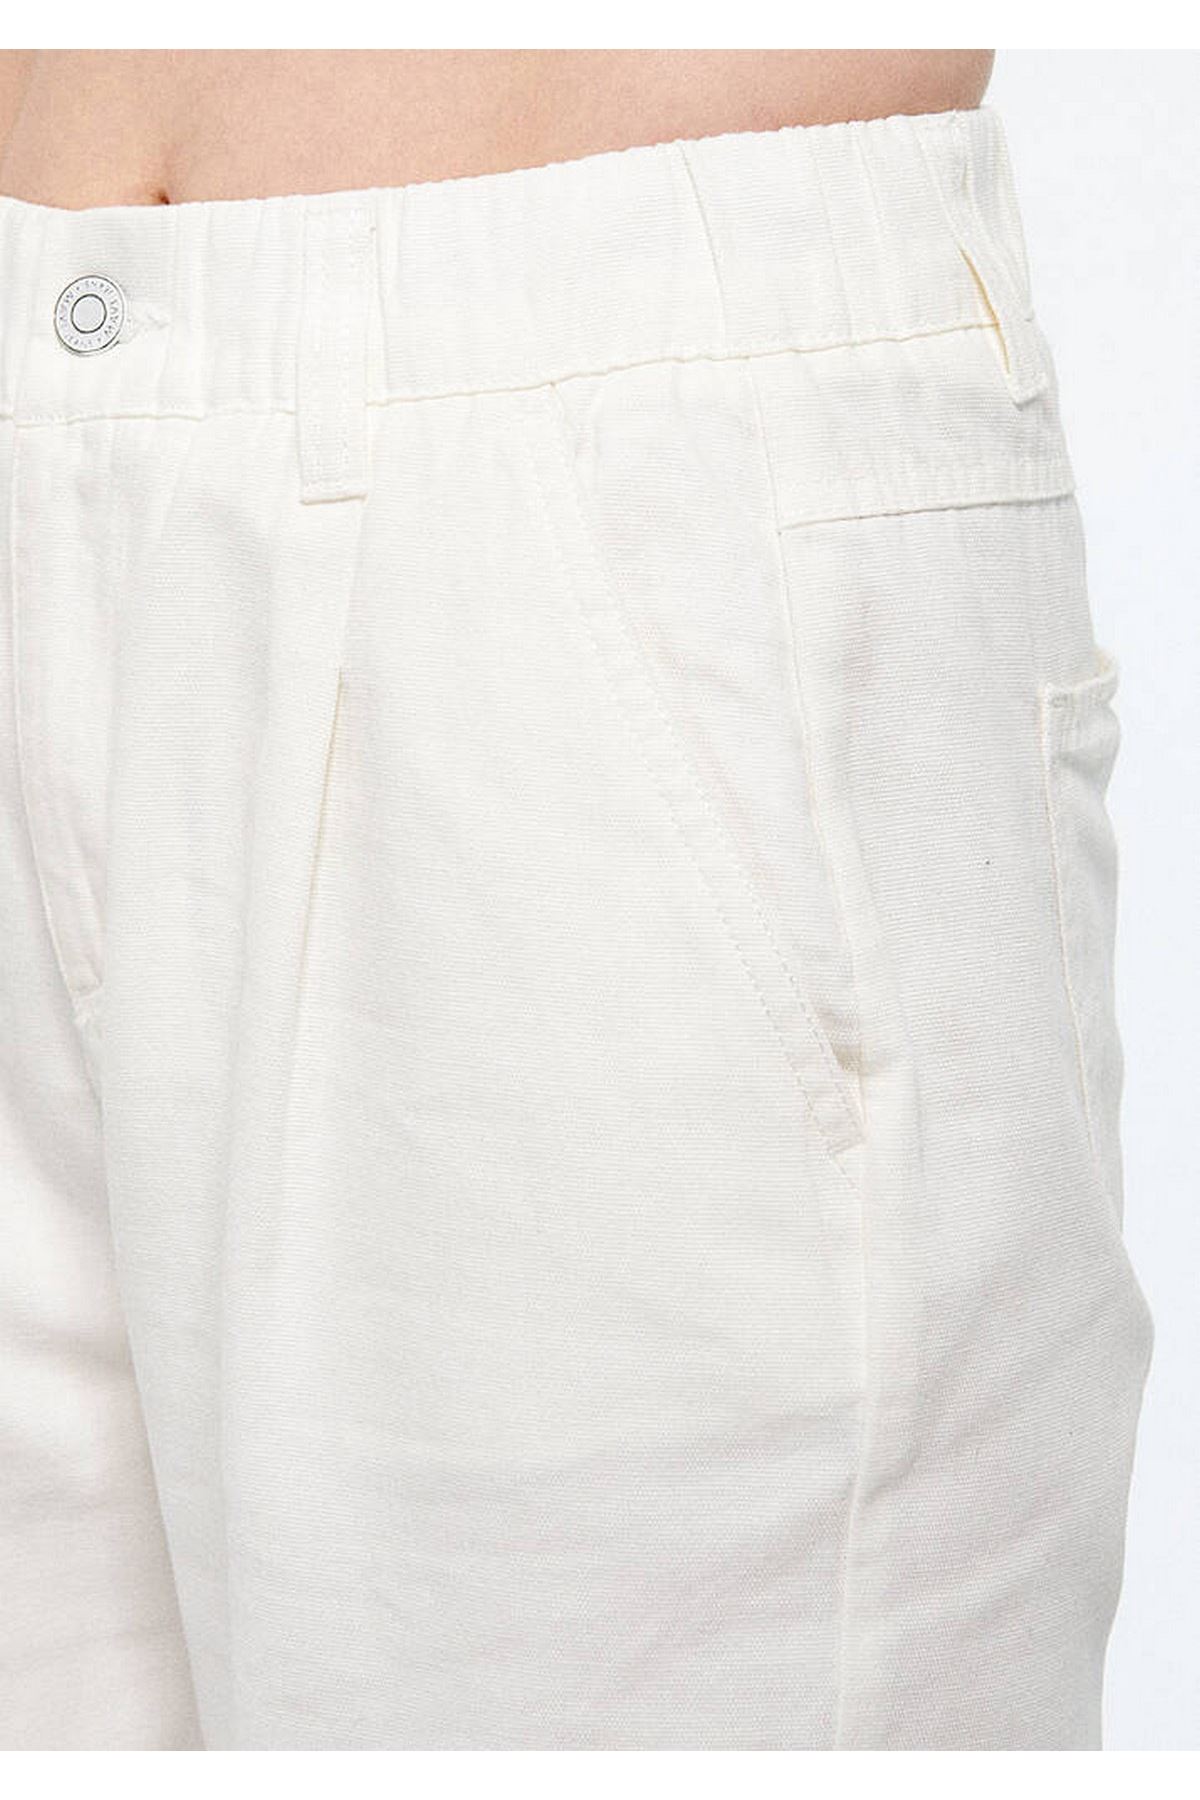 Dokuma Mavi Kadın Beyaz Kanvas Pantolon - M1010065-70057